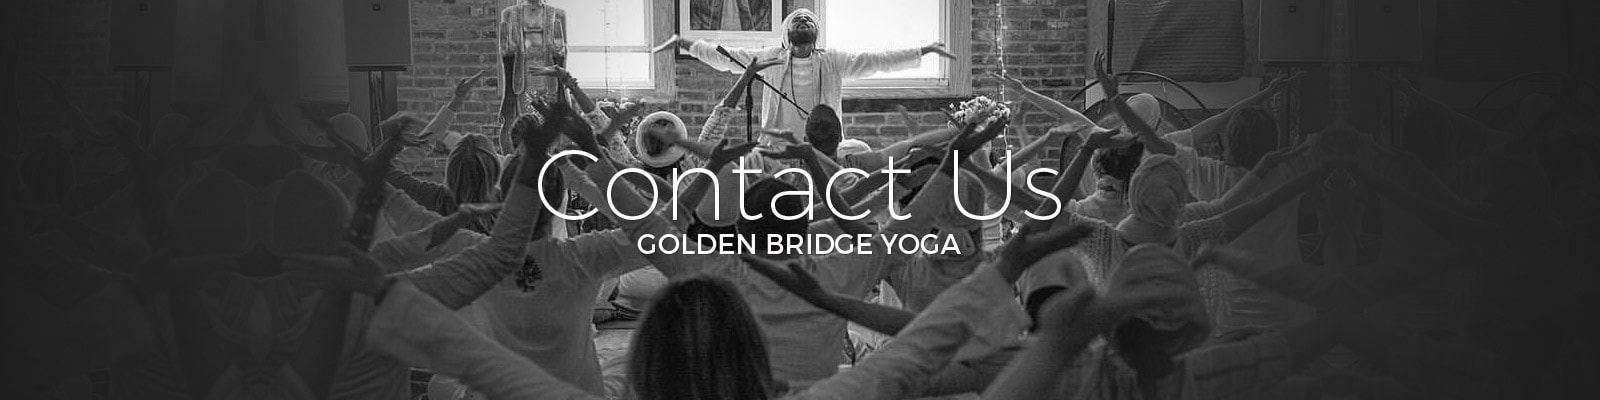 Contact Us - Golden Bridge Yoga